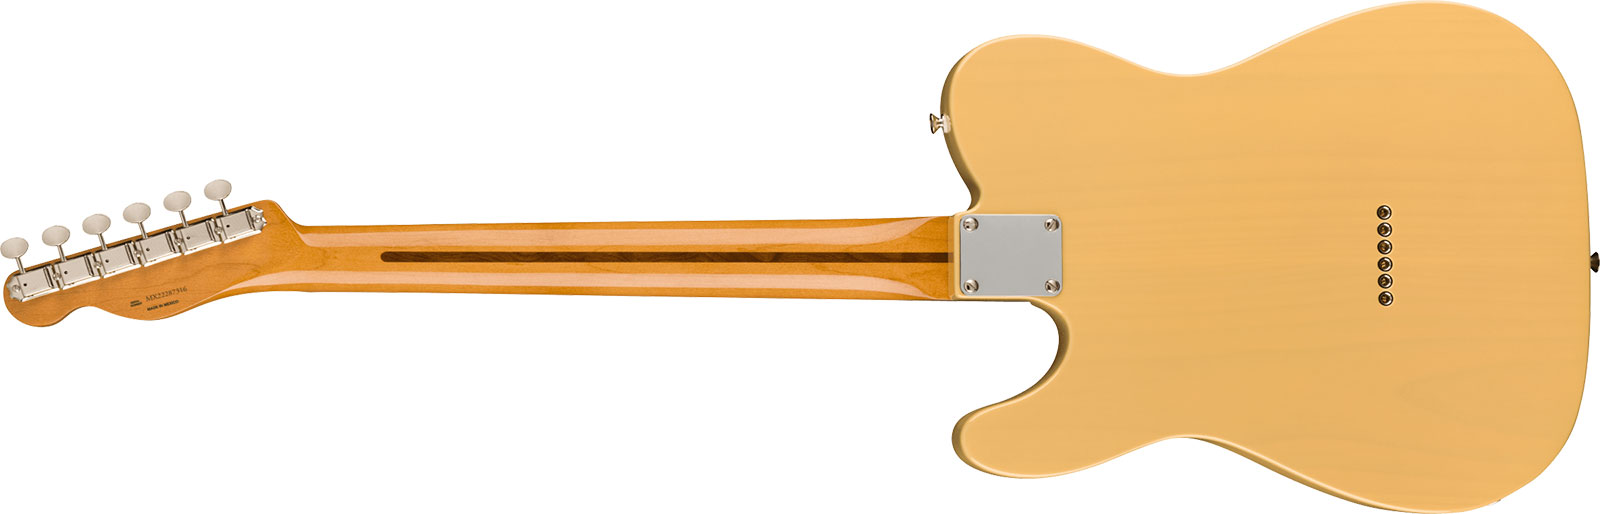 Fender Tele Nocaster 50s Vintera 2 Mex 2s Ht Mn - Blackguard Blonde - Tel shape electric guitar - Variation 1